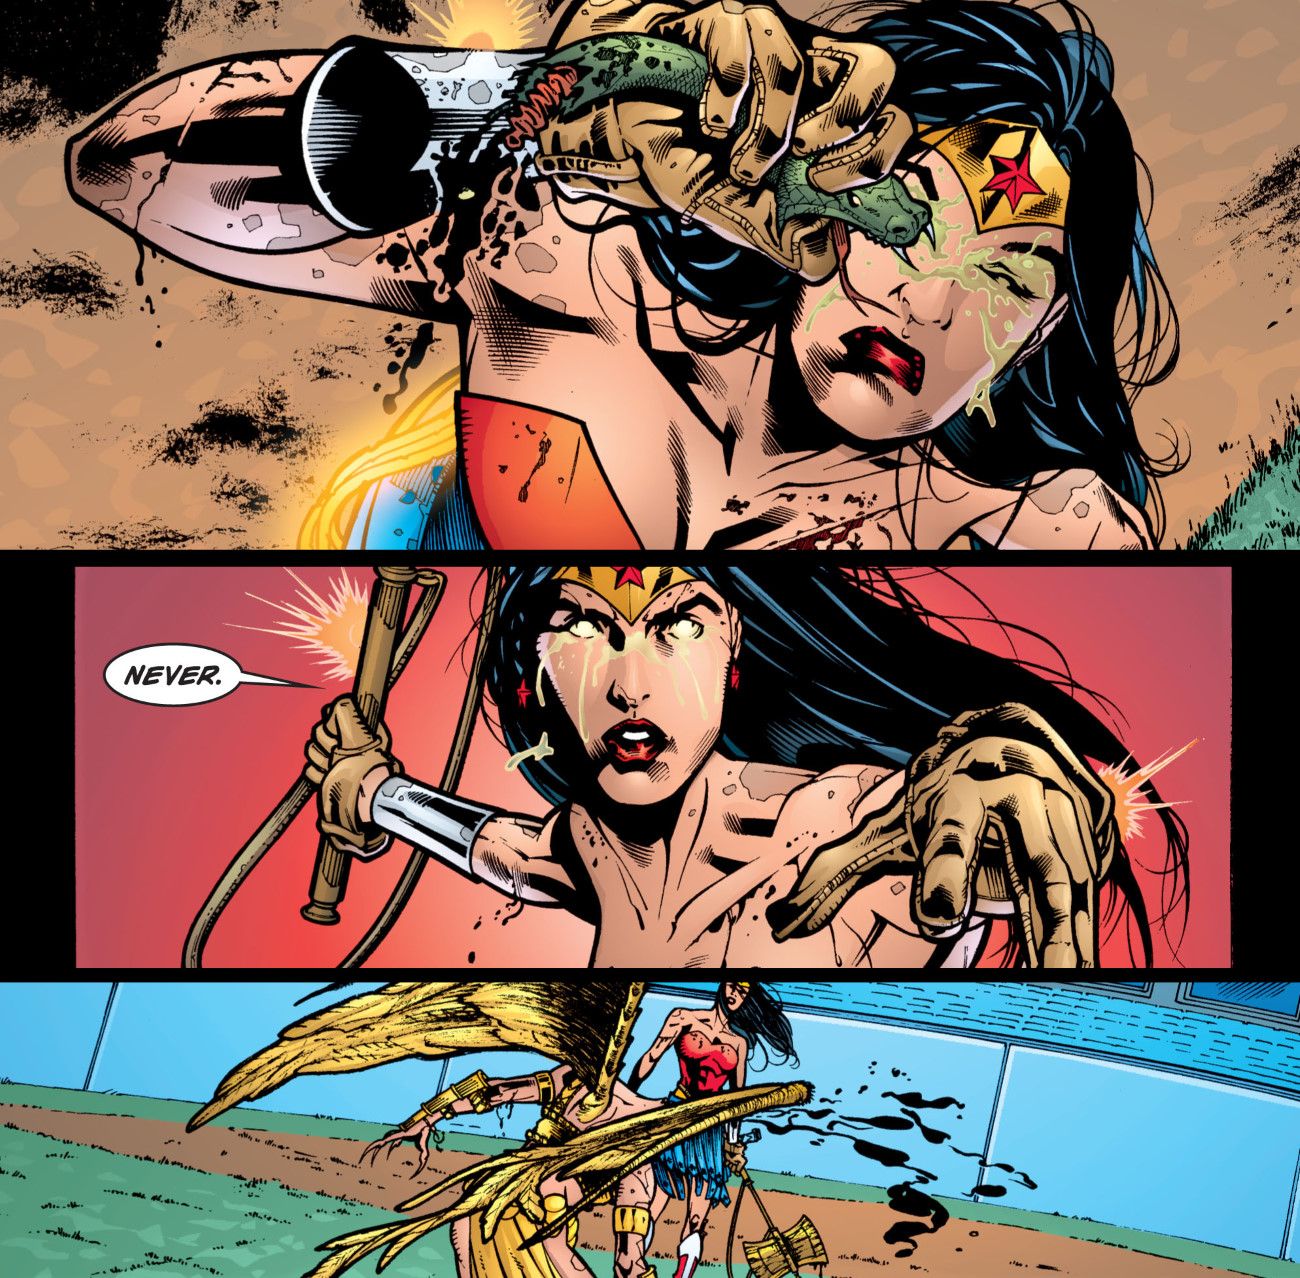 Wonder Woman Comic Blinds and Kills Medusa